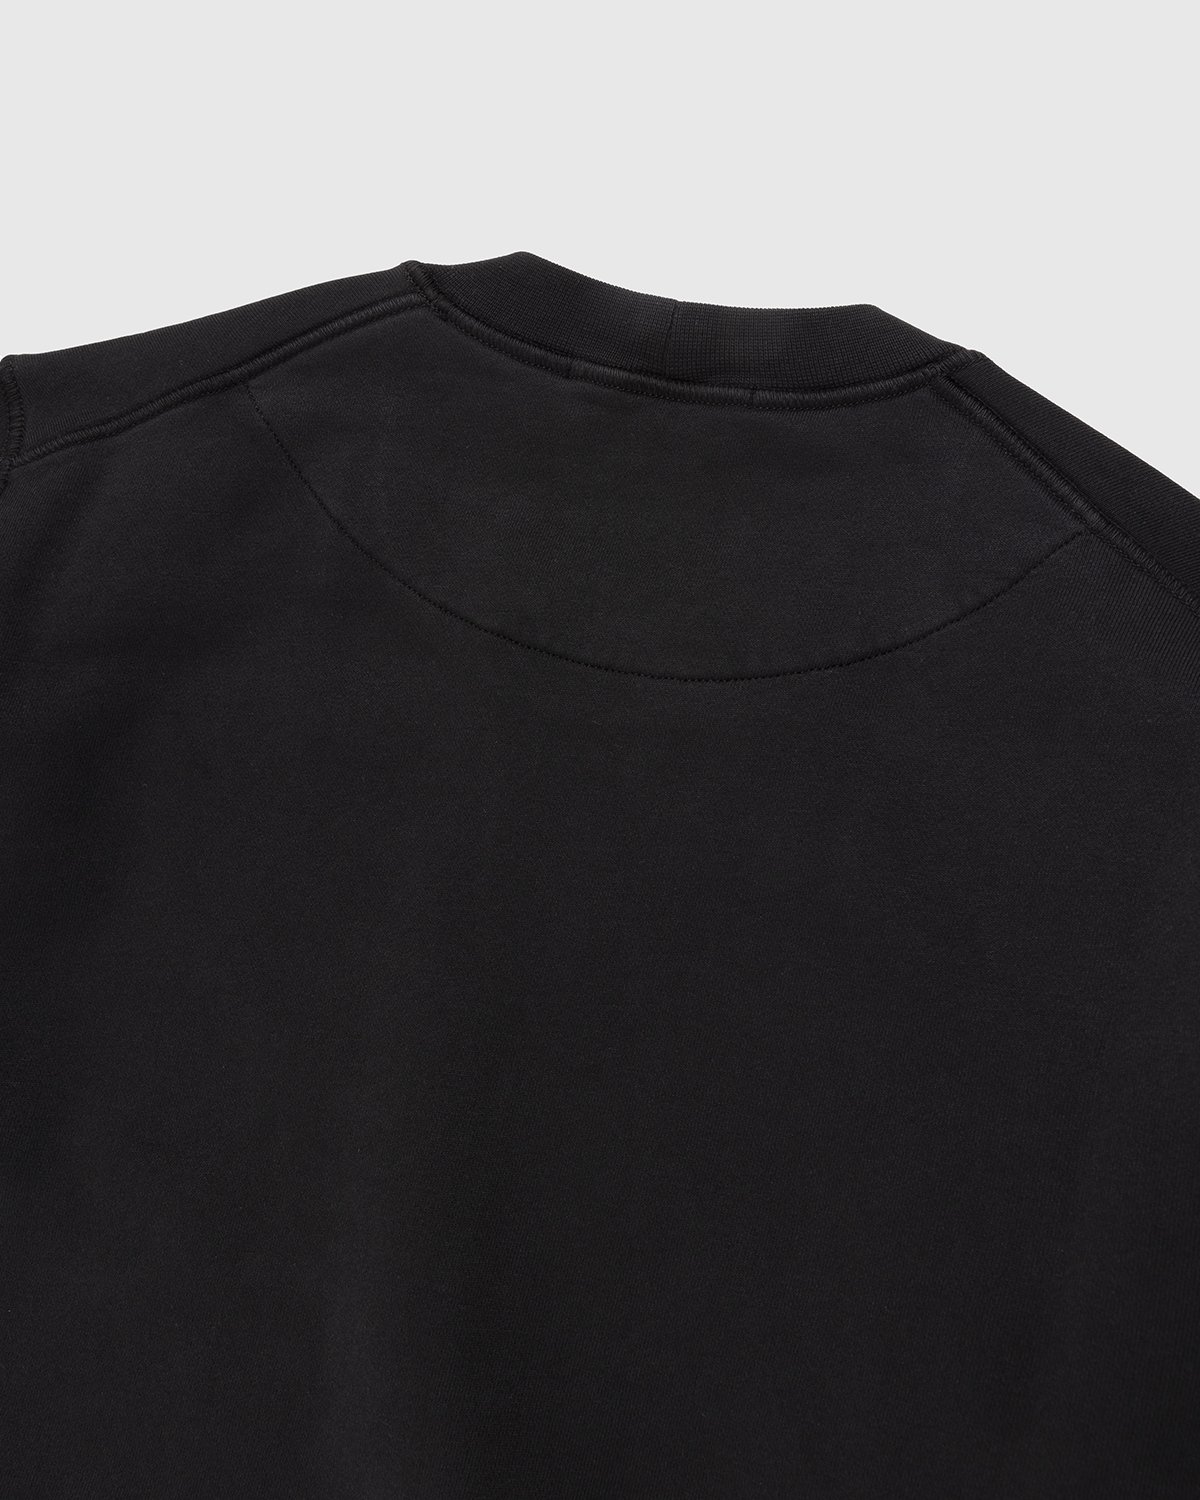 Stone Island - 63051 Garment-Dyed Cotton Fleece Crewneck Black - Clothing - Black - Image 3